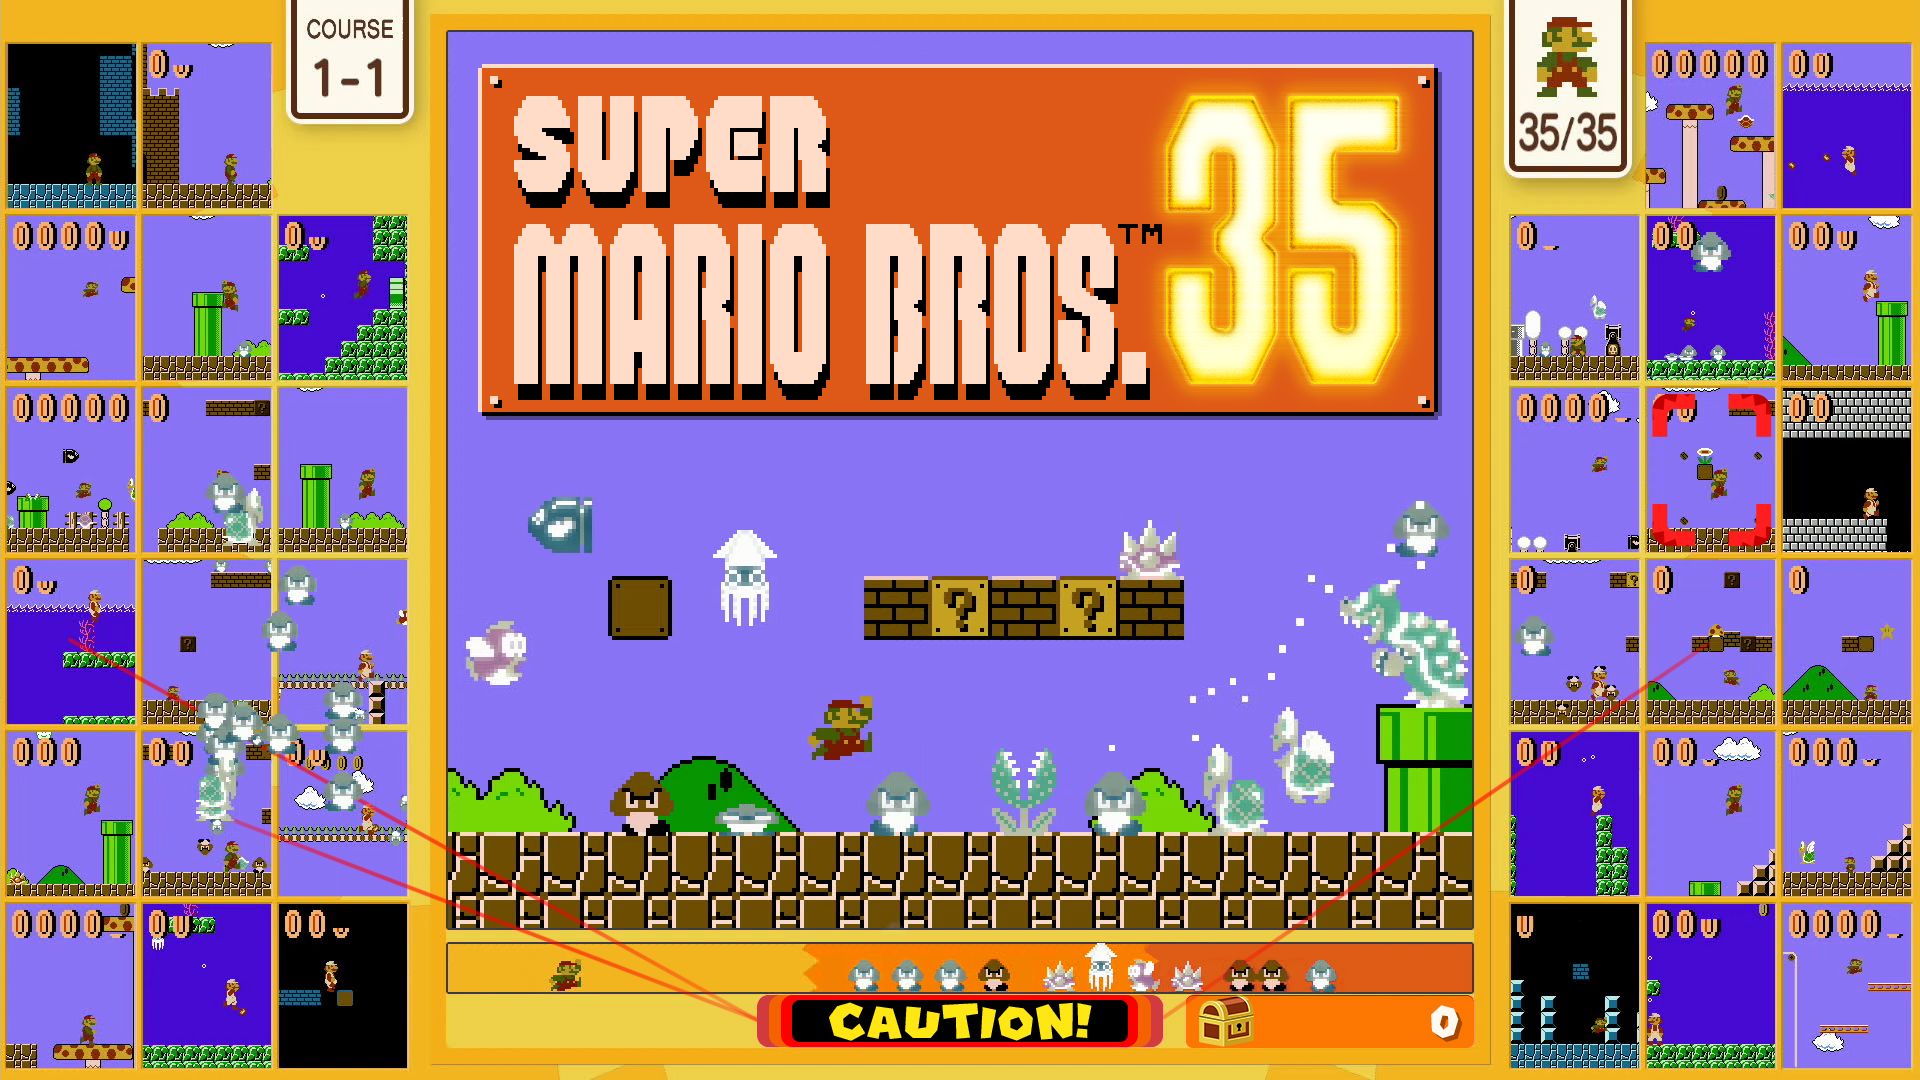 Super Mario Bros. 35 oznámeno pro Nintendo Switch online, dostupné 1. října